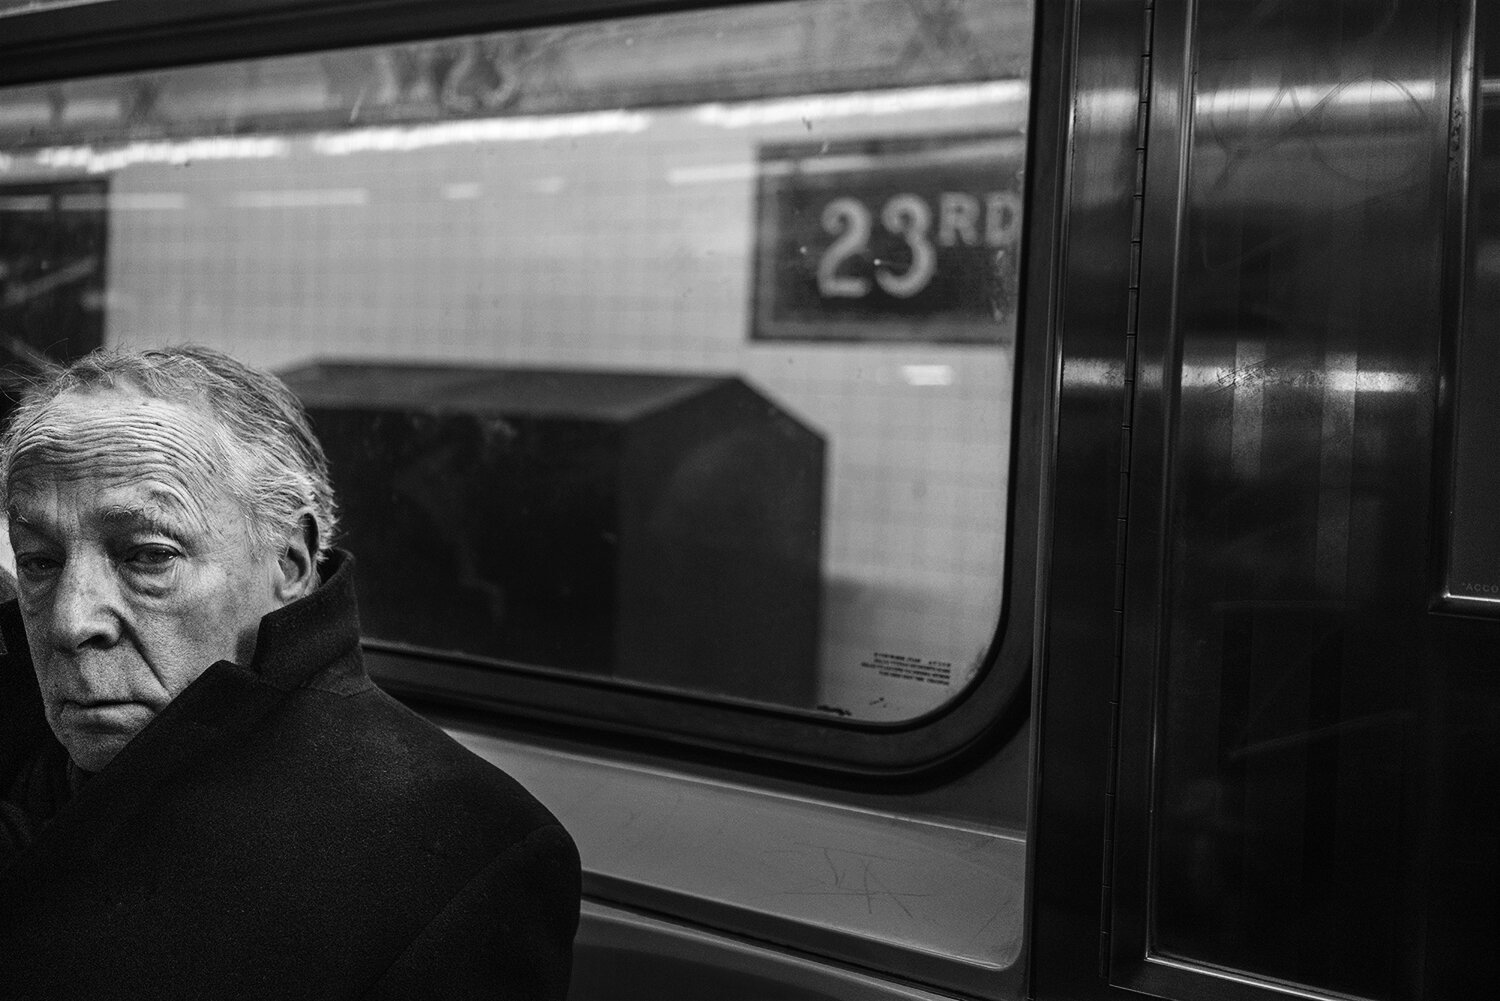 NYC_Subway_2018_Trench_Coat_Man-043.jpg